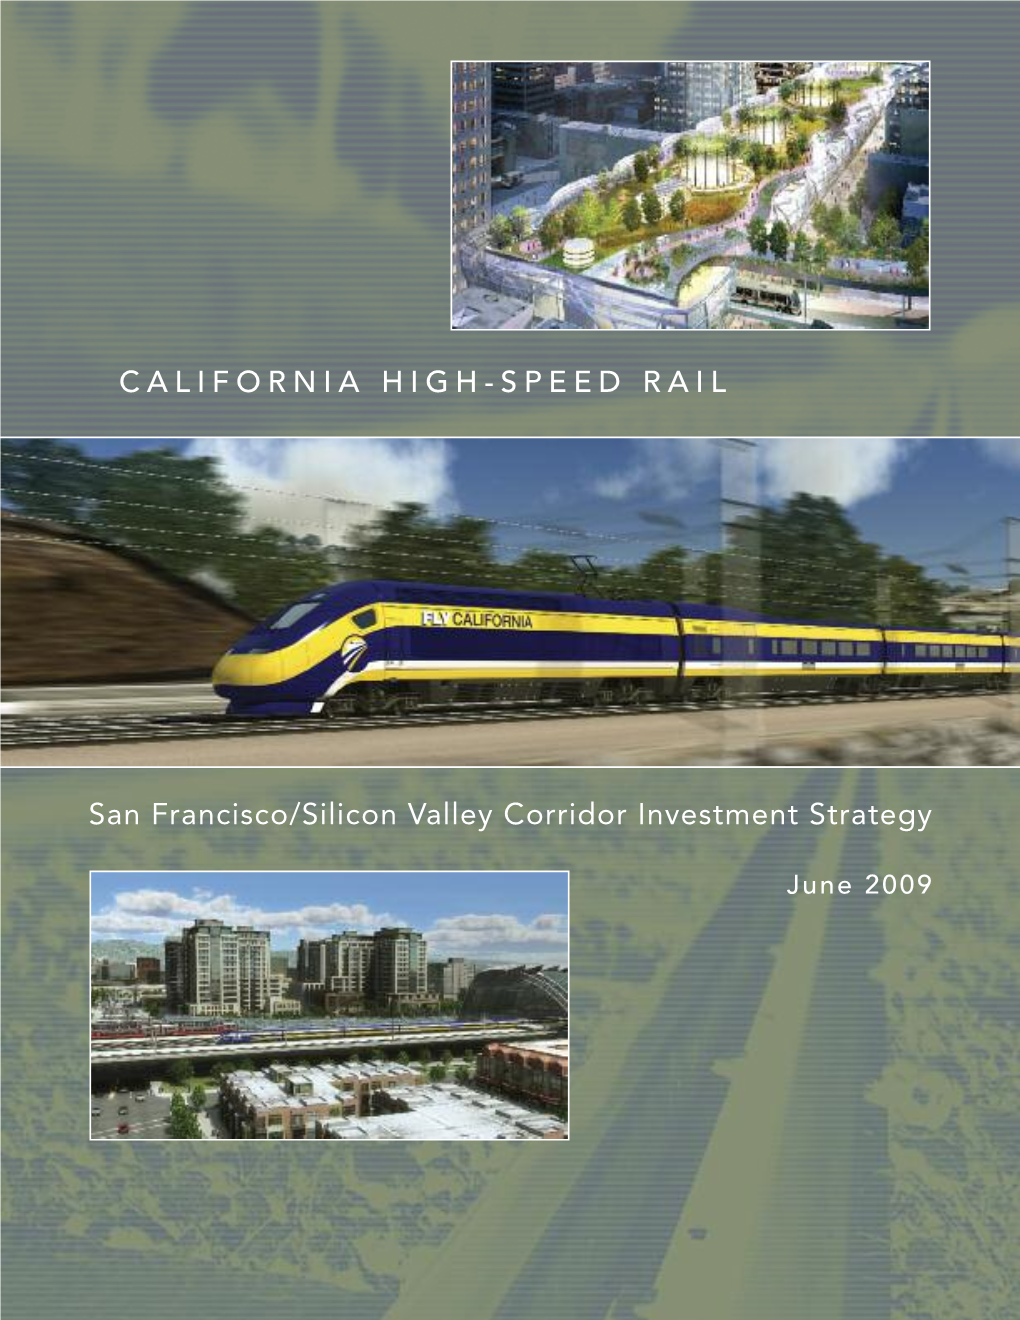 San Francisco/Silicon Valley Corridor Investment Strategy